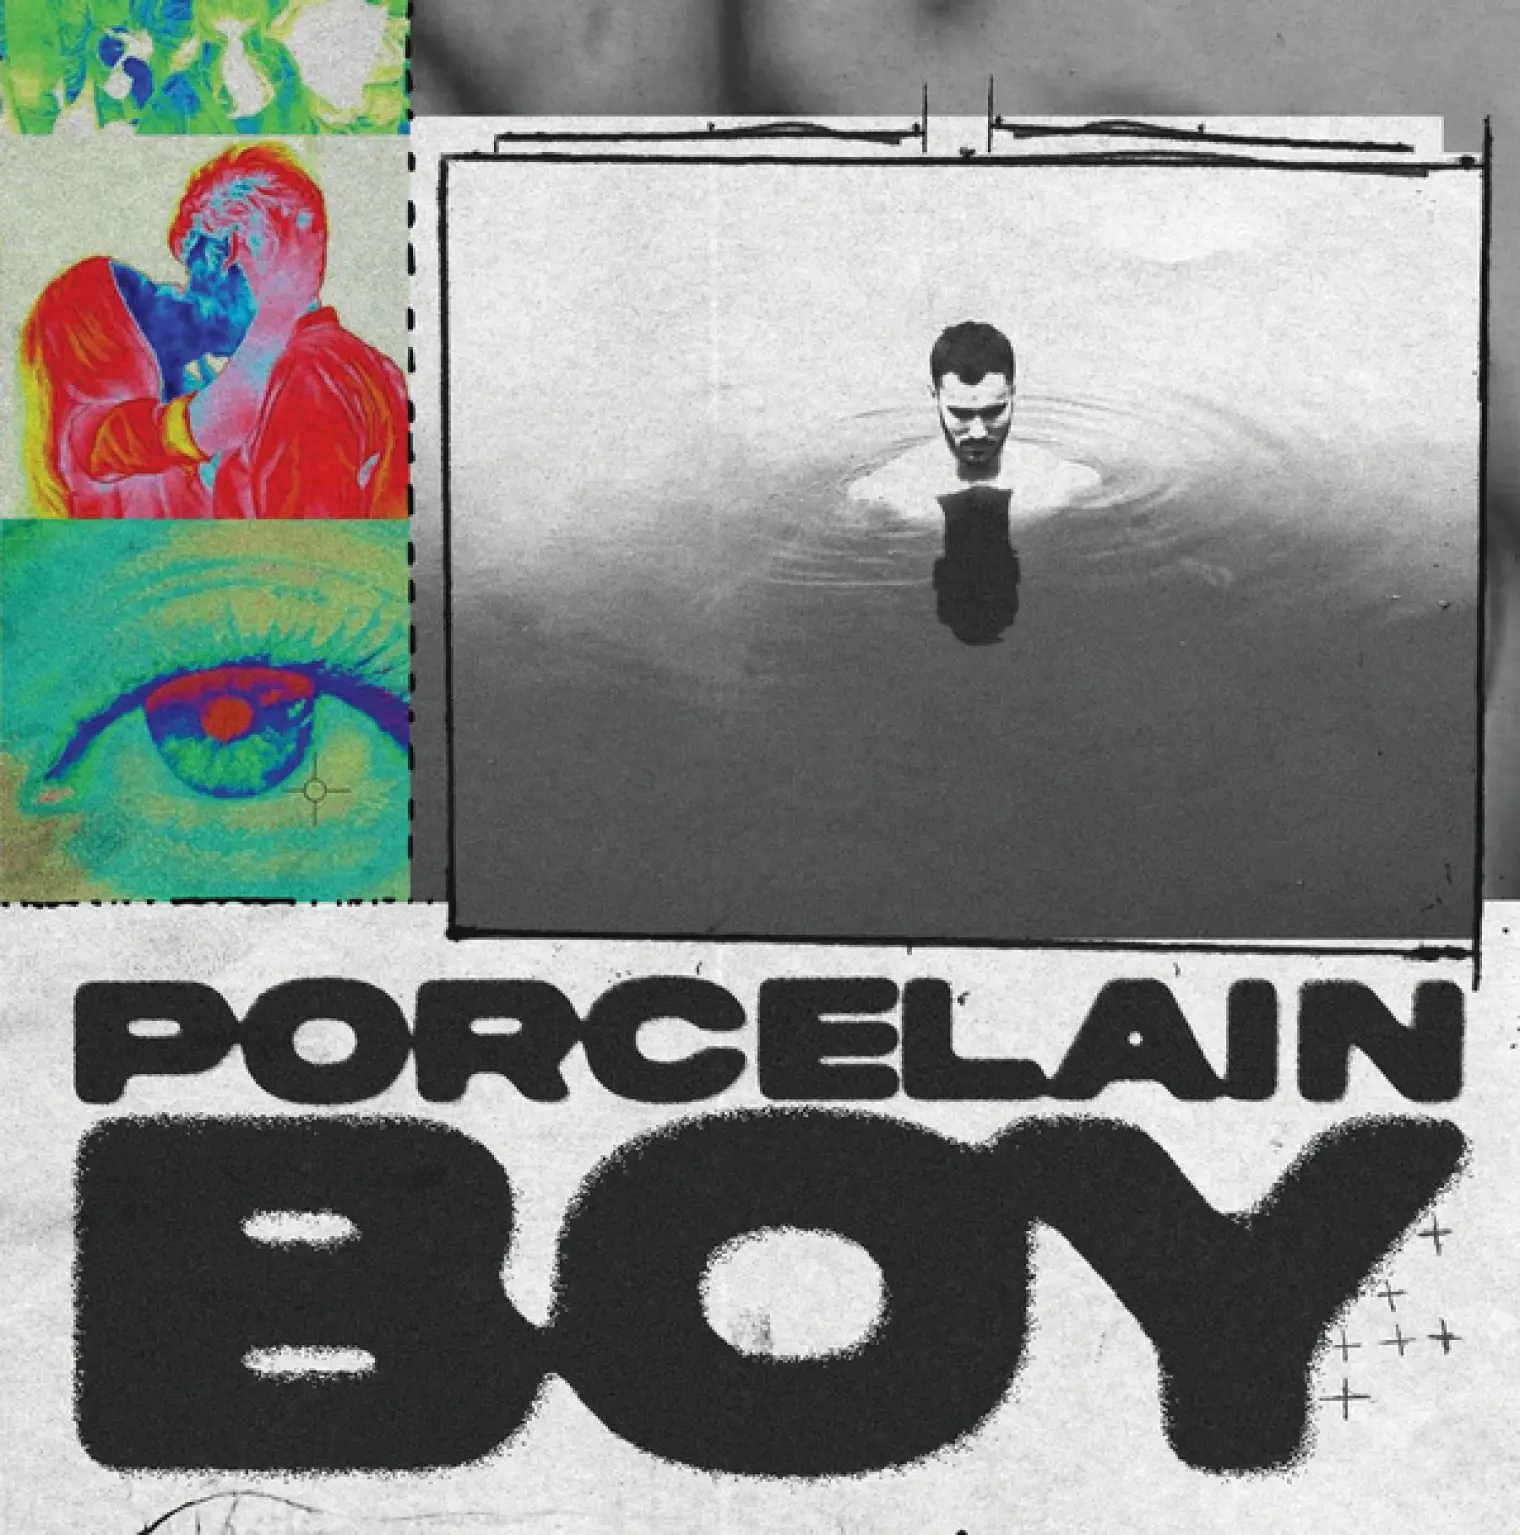 Porcelain Boy -  Sunman 